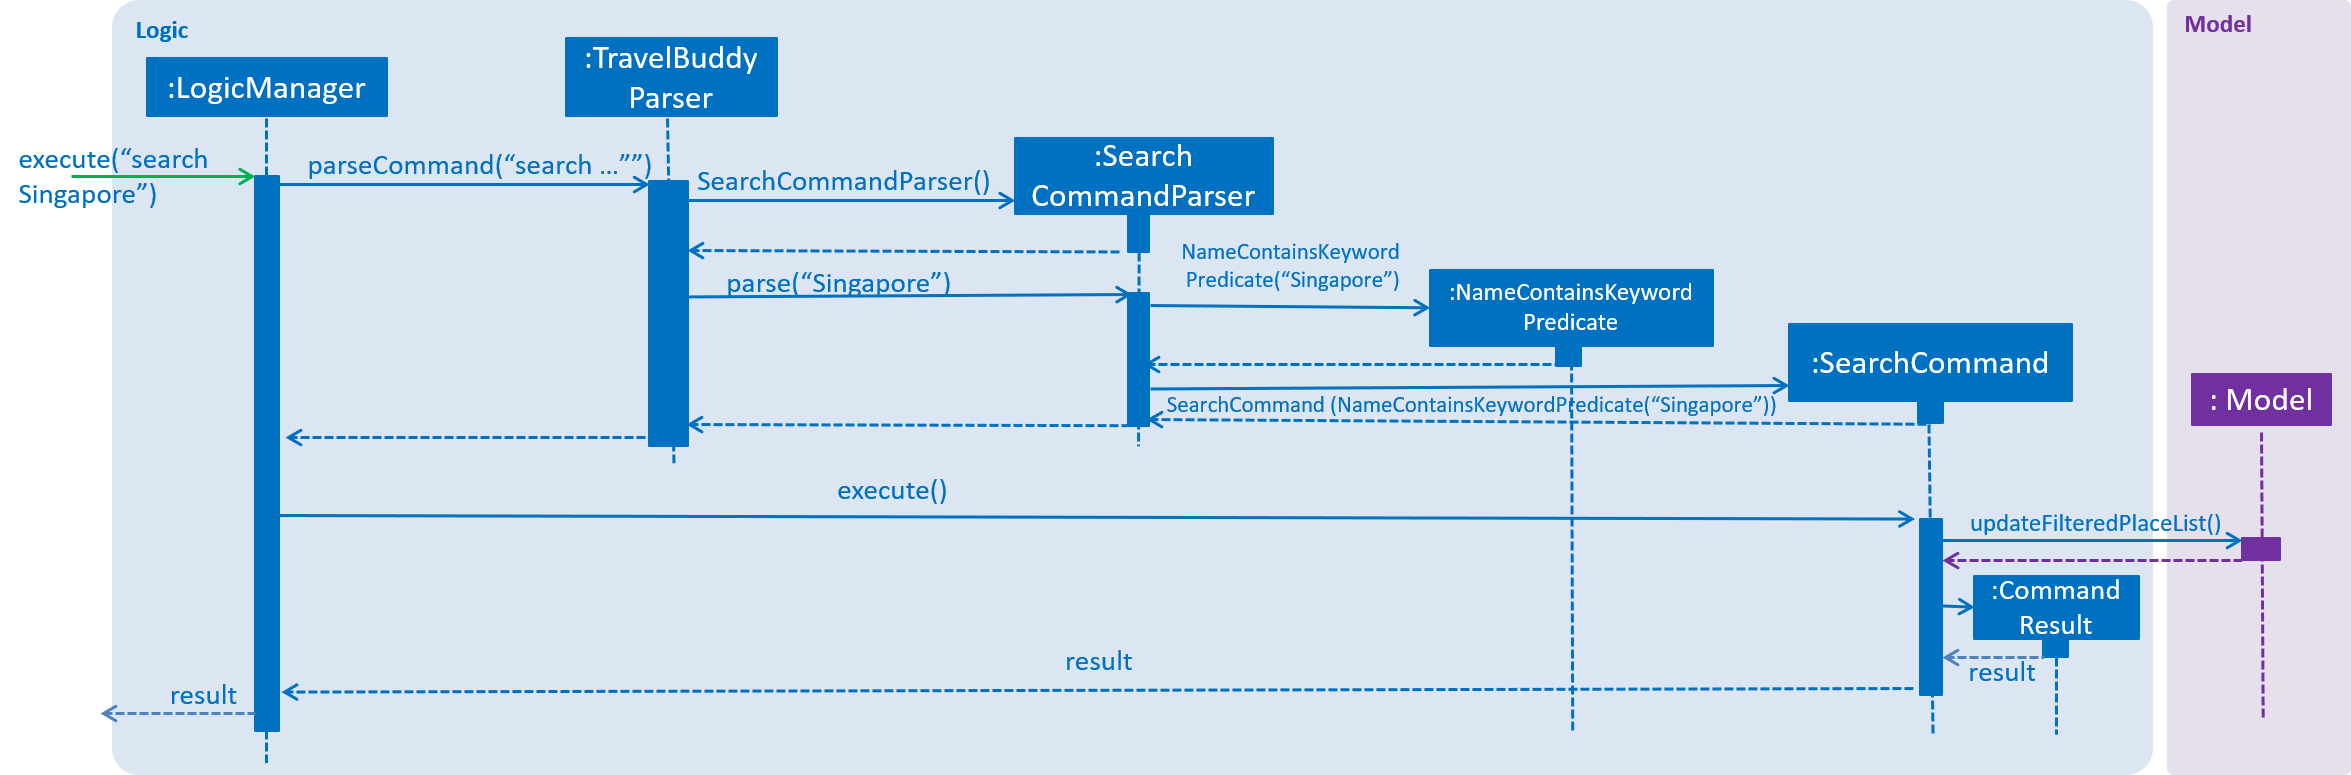 SearchCommandSequenceDiagram